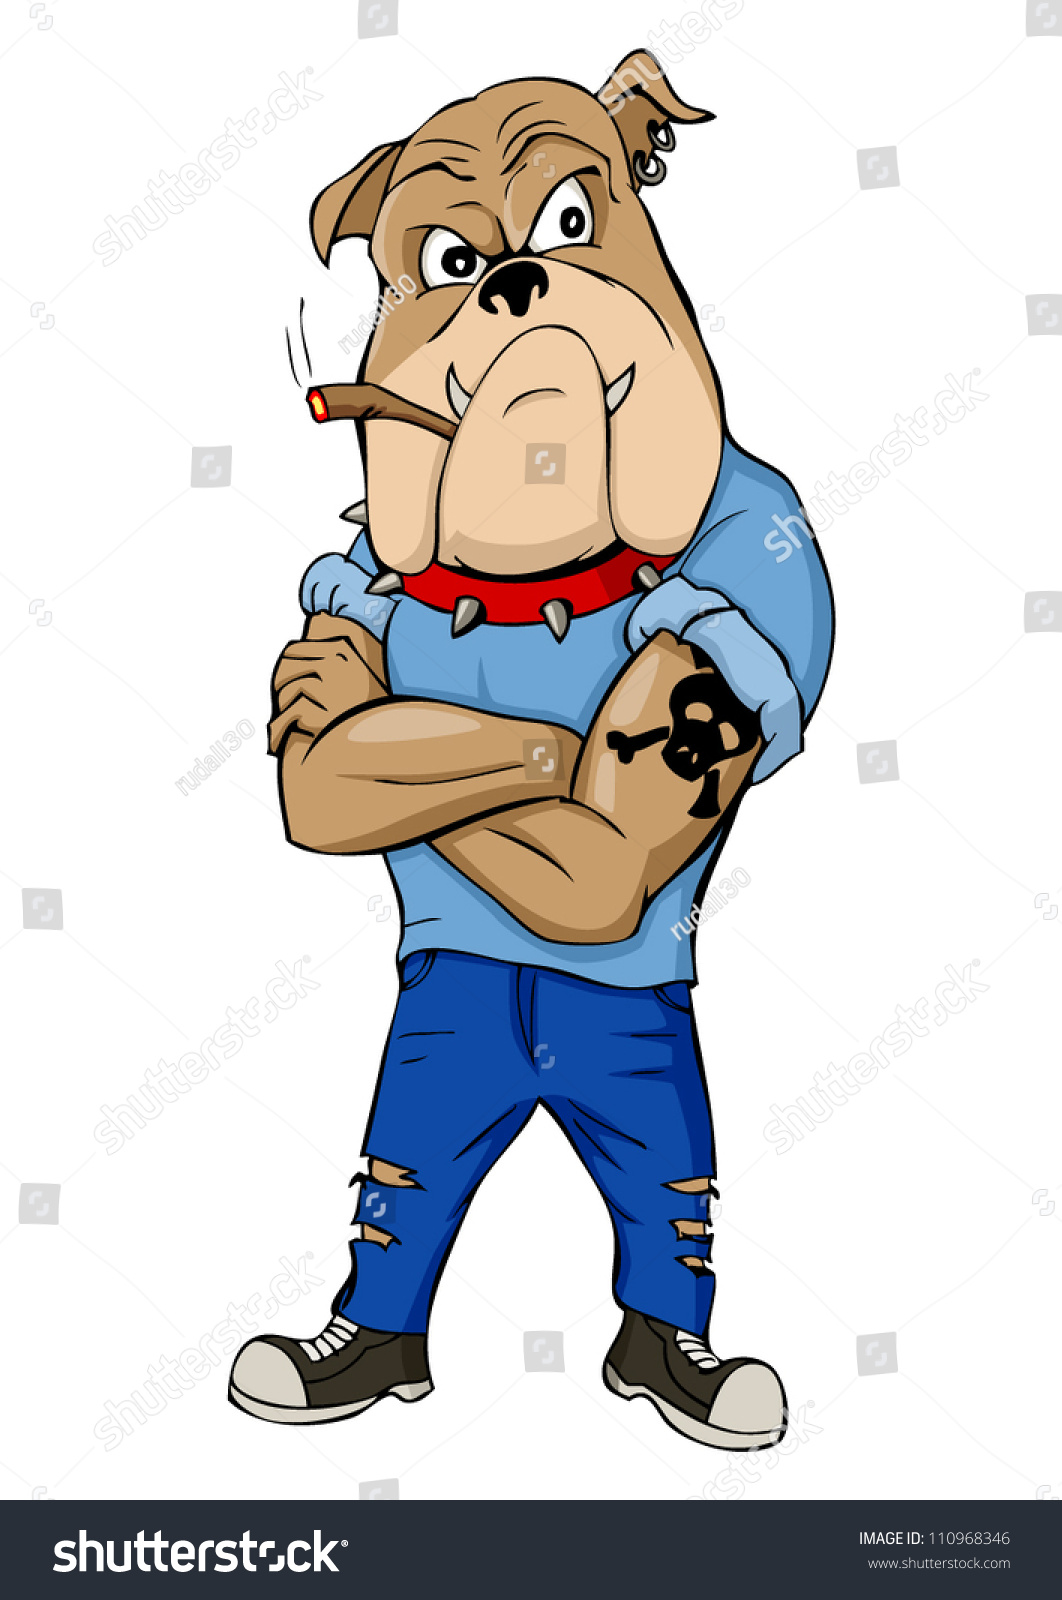 stock-vector-cartoon-illustration-of-a-bulldog-as-a-thug-110968346.jpg